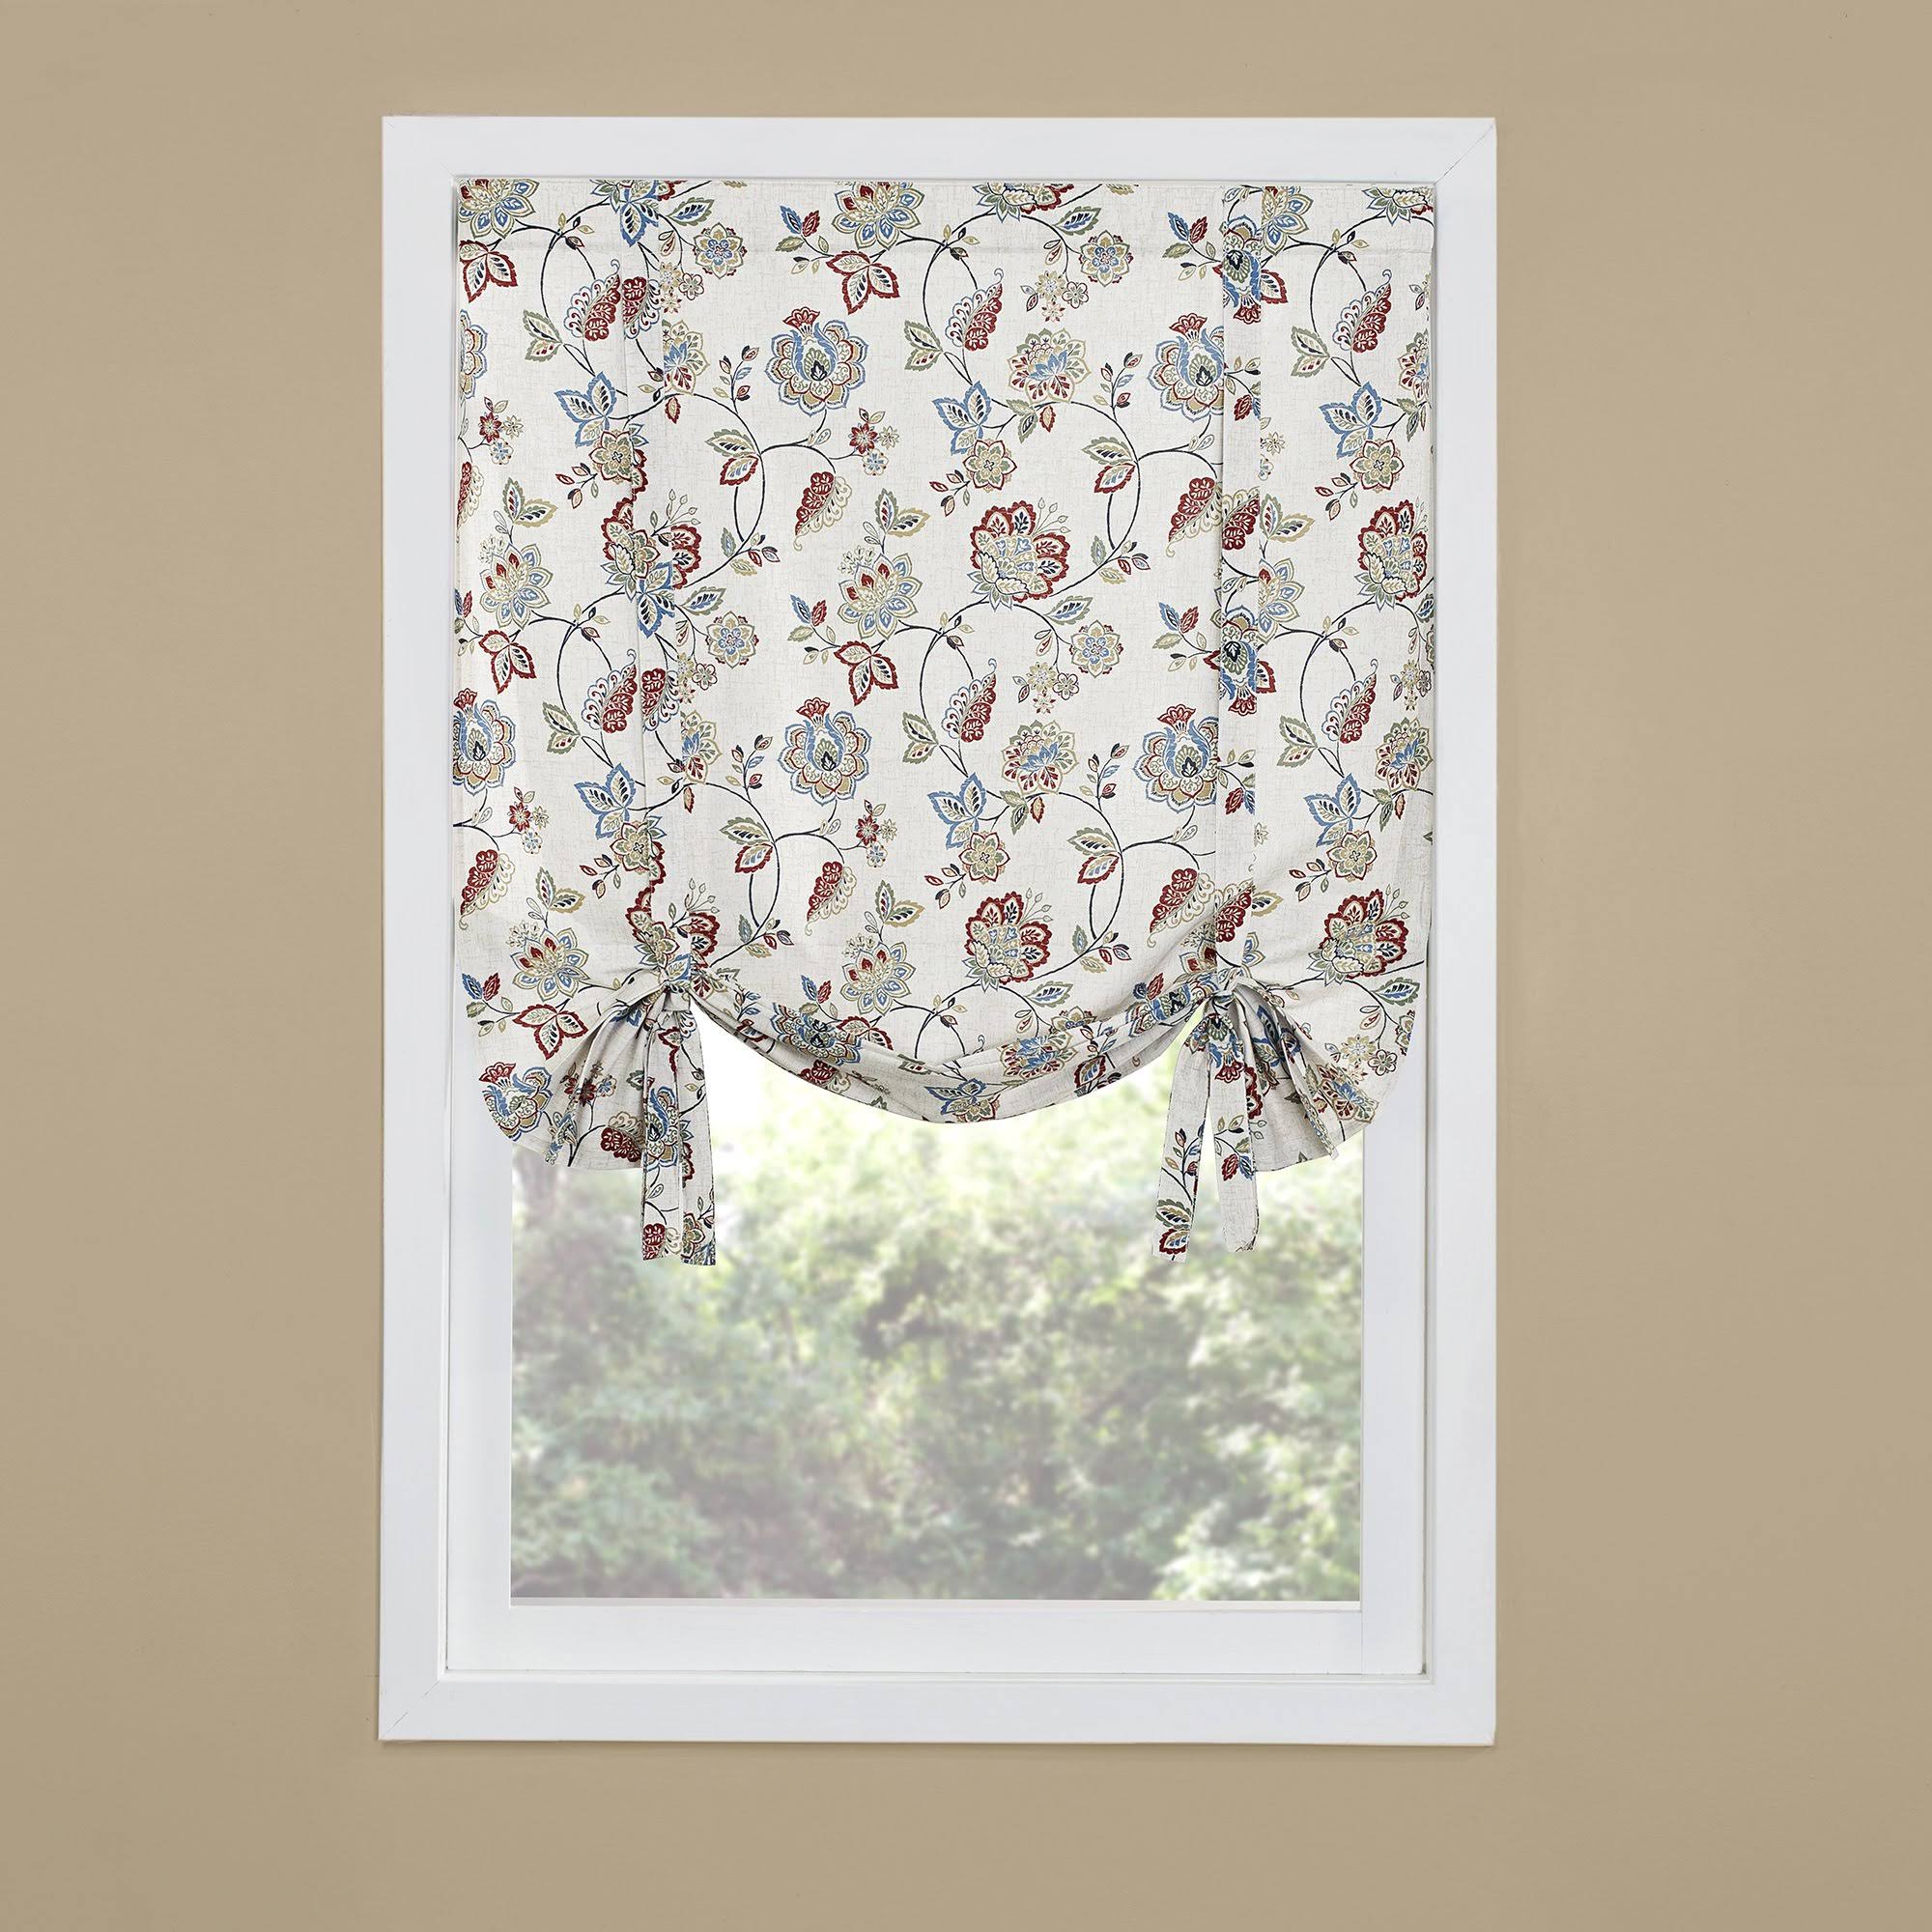 Renaissance Home Fashion Colette Printed Drape Shade, 44" x 63", Jewel